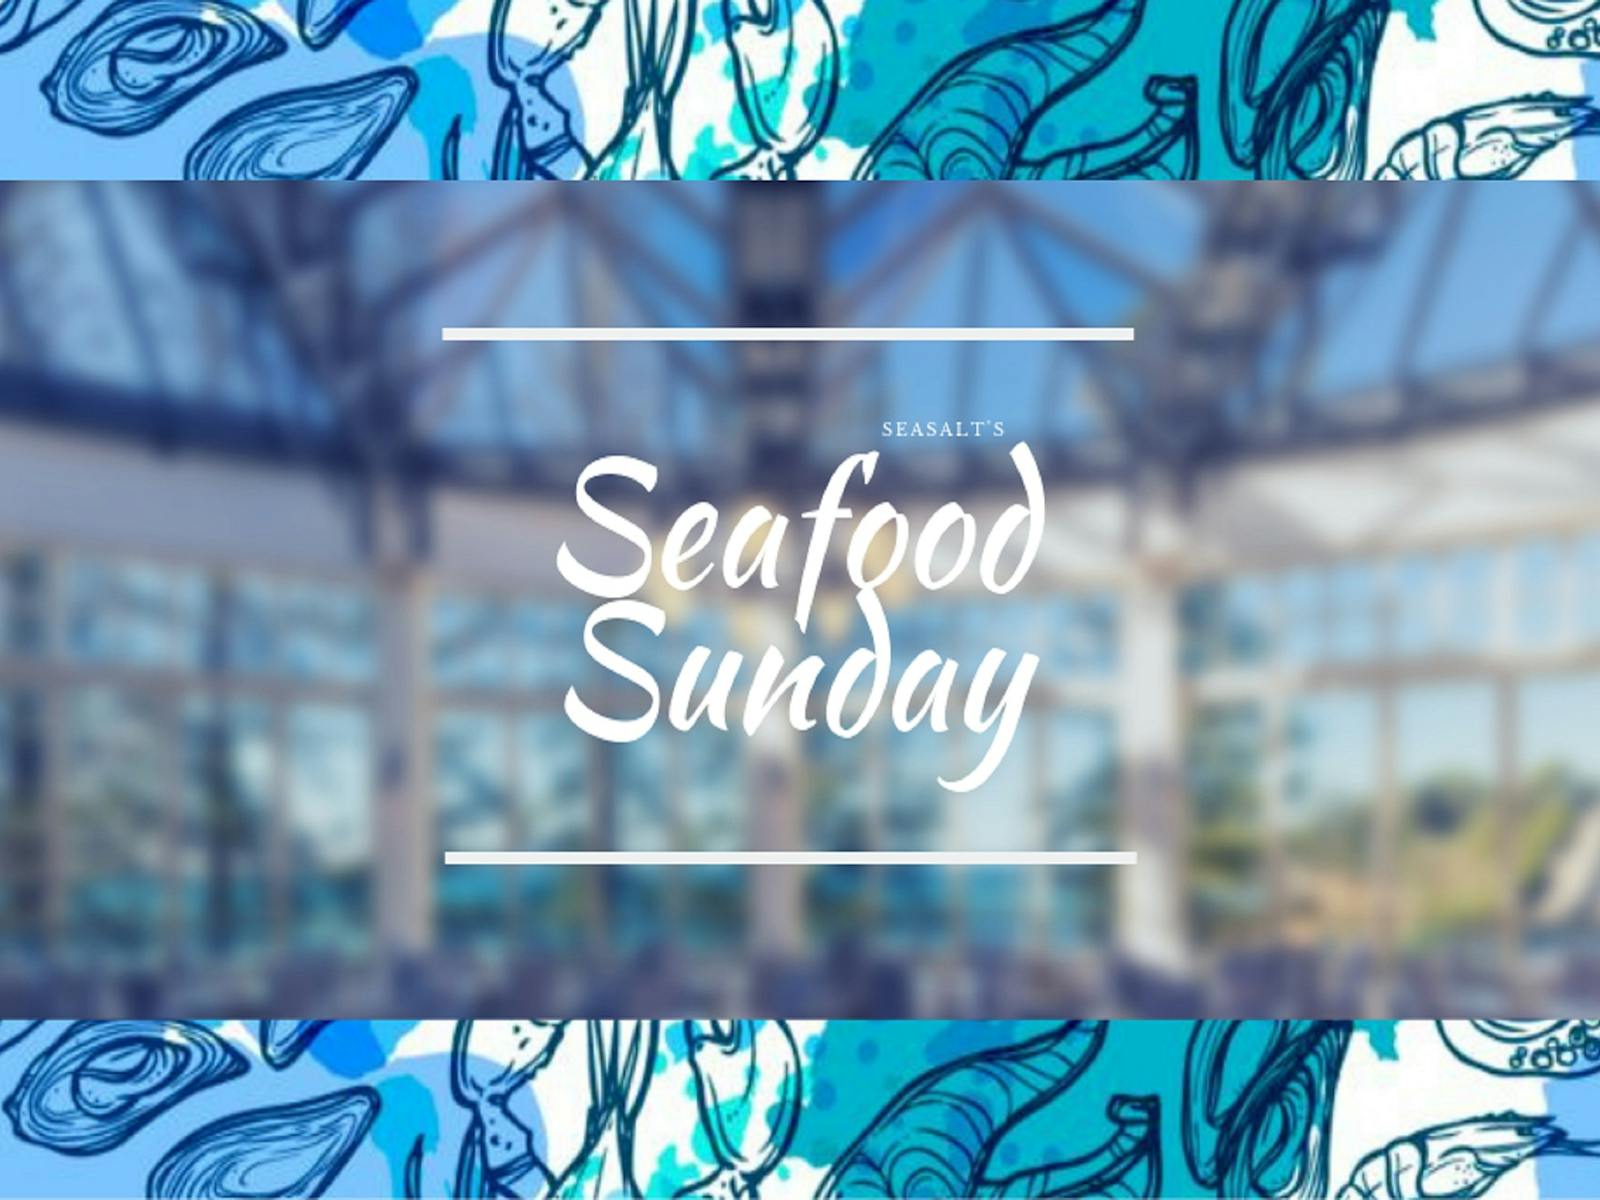 Image for Seasalt’s Seafood Sunday